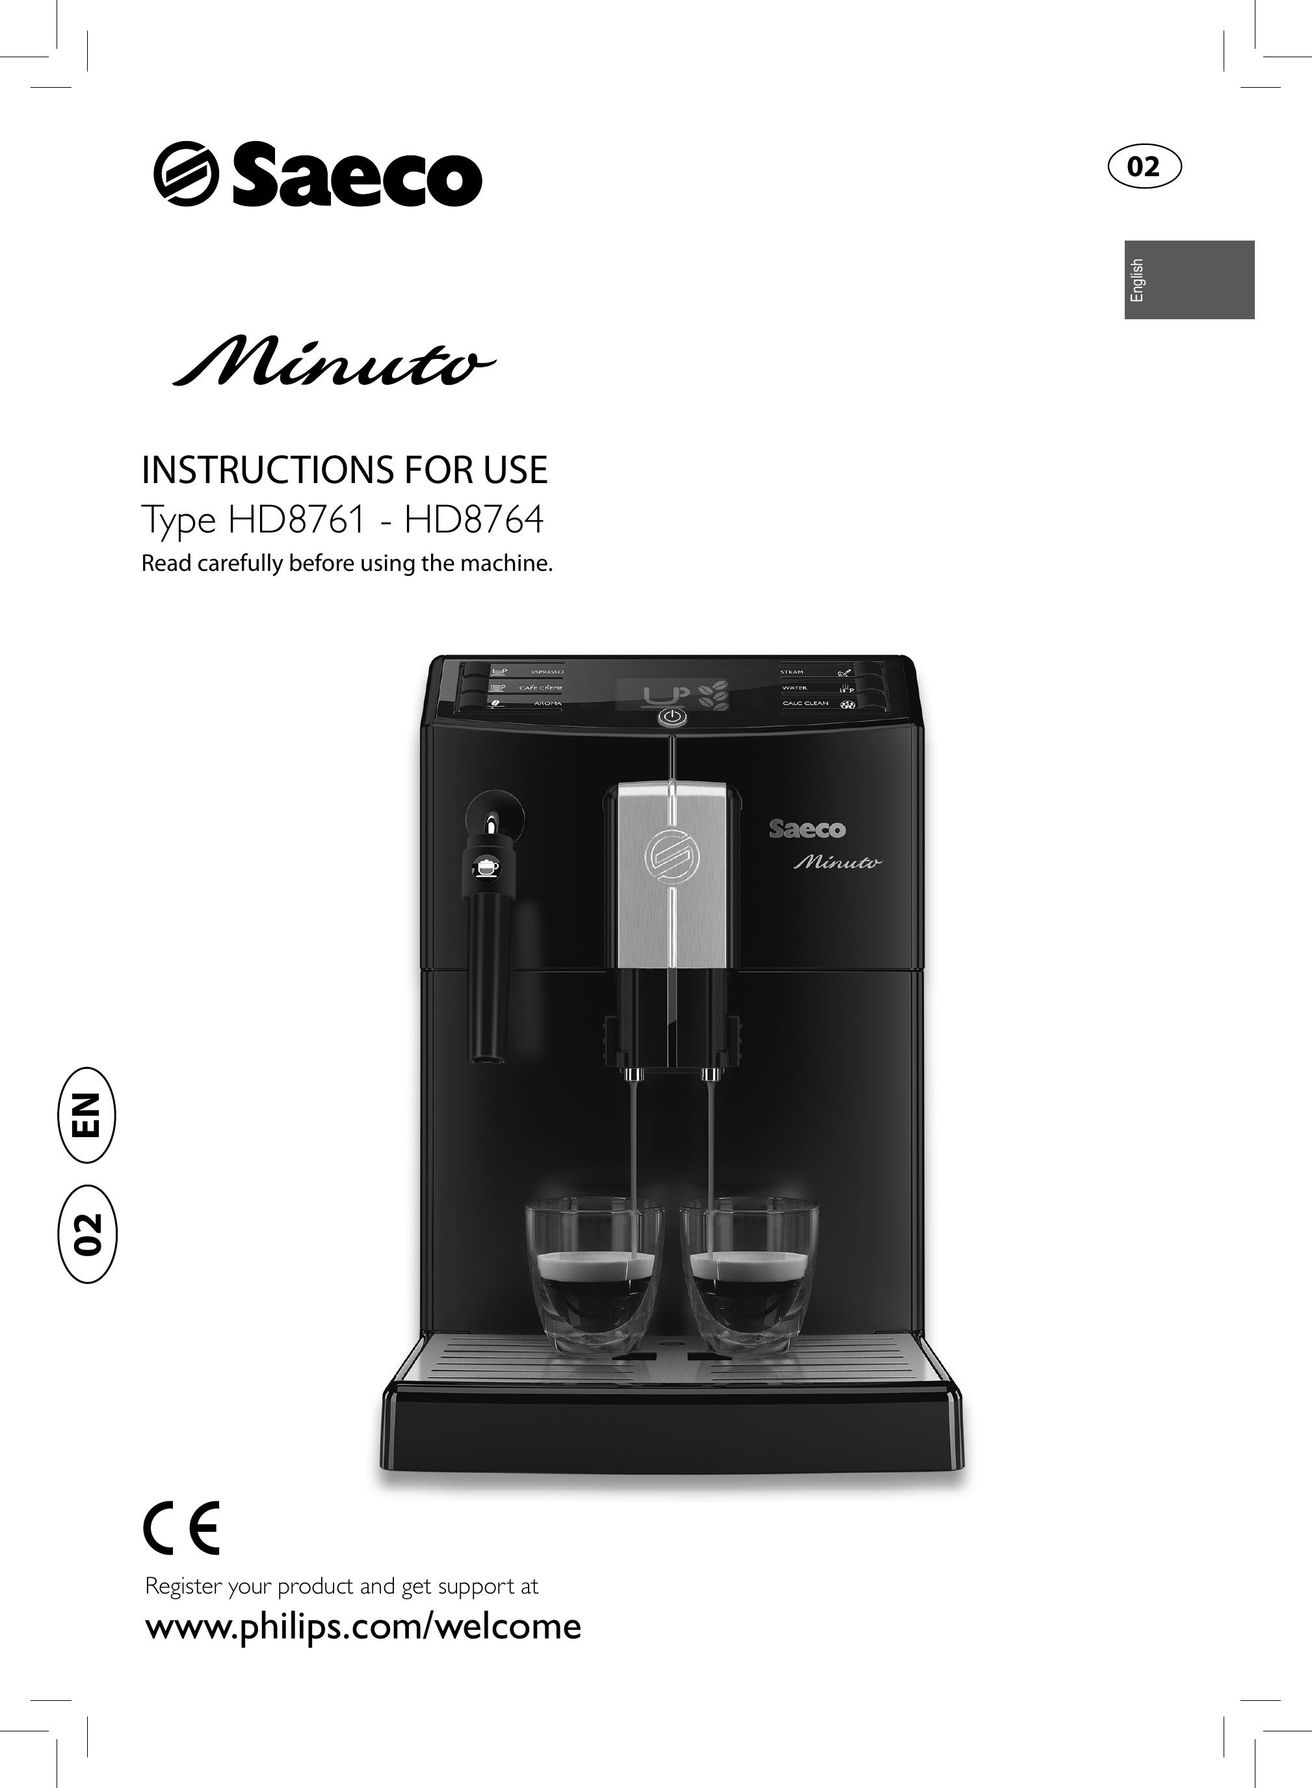 Saeco Coffee Makers HD8761 Coffeemaker User Manual